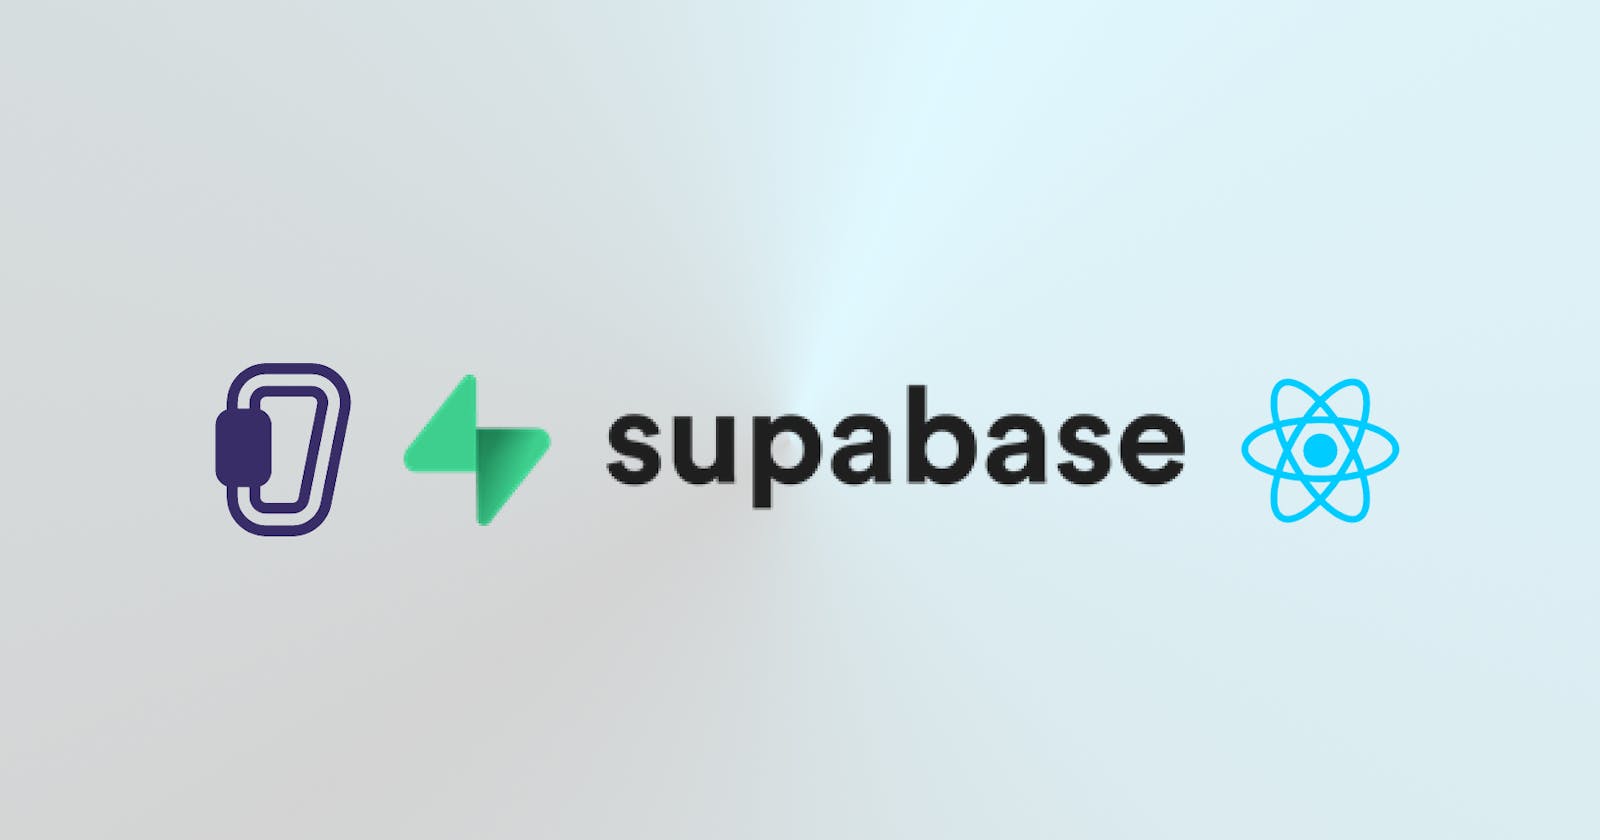 Build a Fullstack serverless application using React, Chakra UI, Hookstate, and Supabase